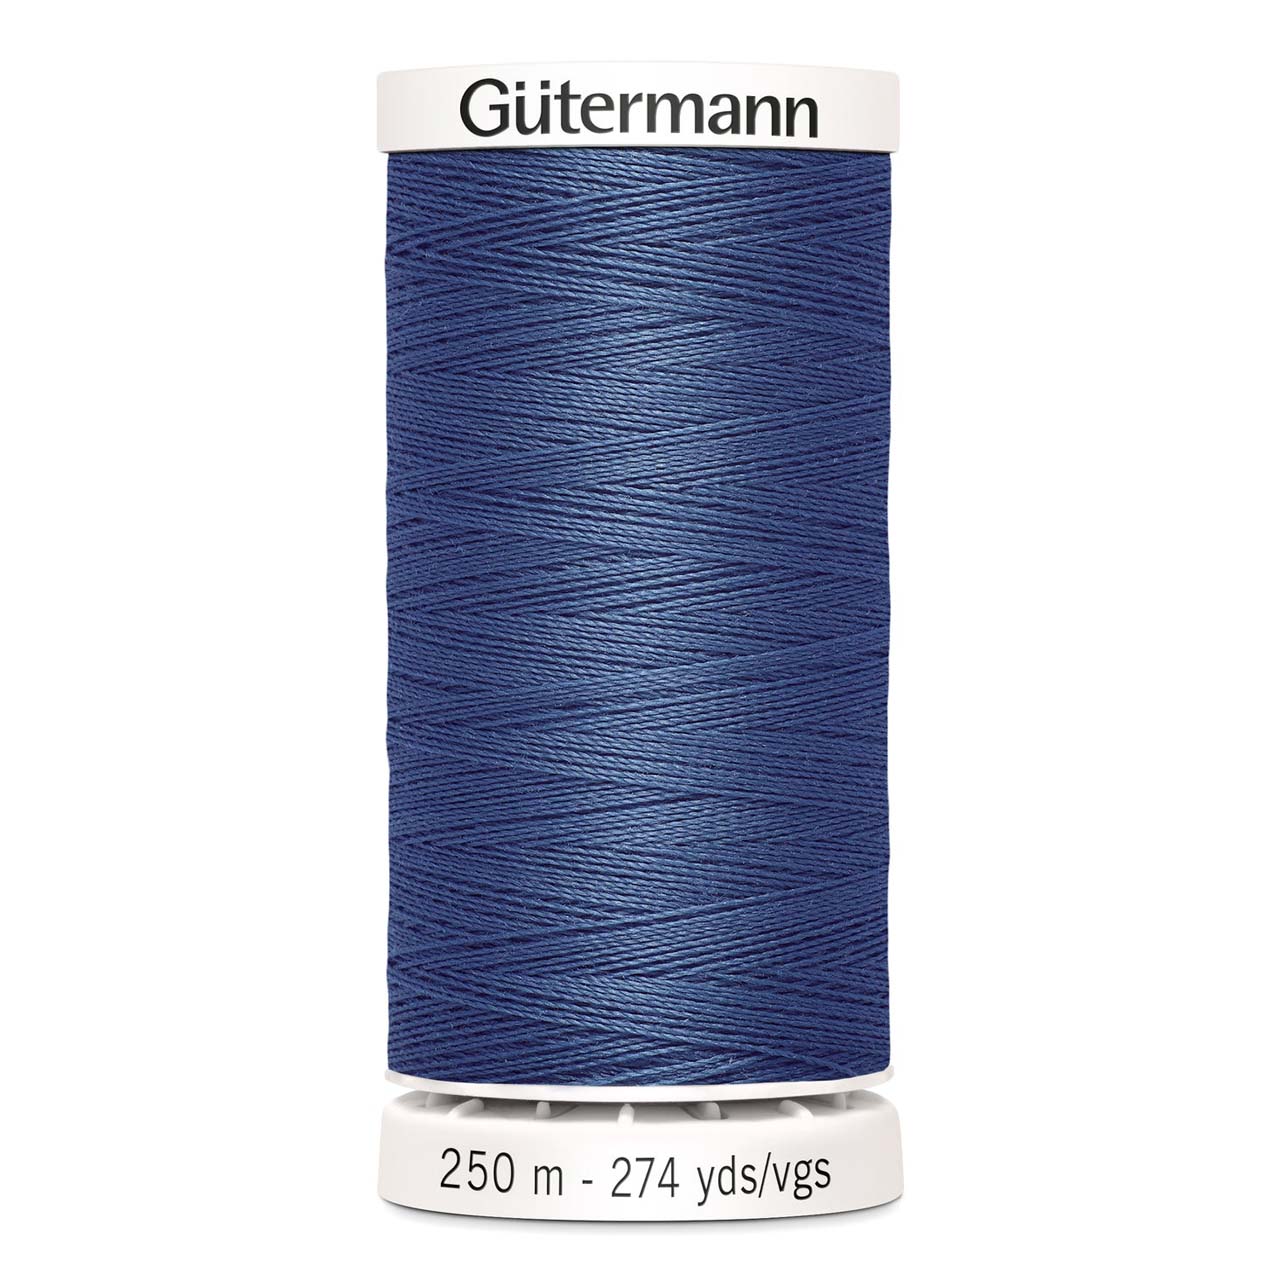 Gutermann thread 435 sewing thread 250 metres